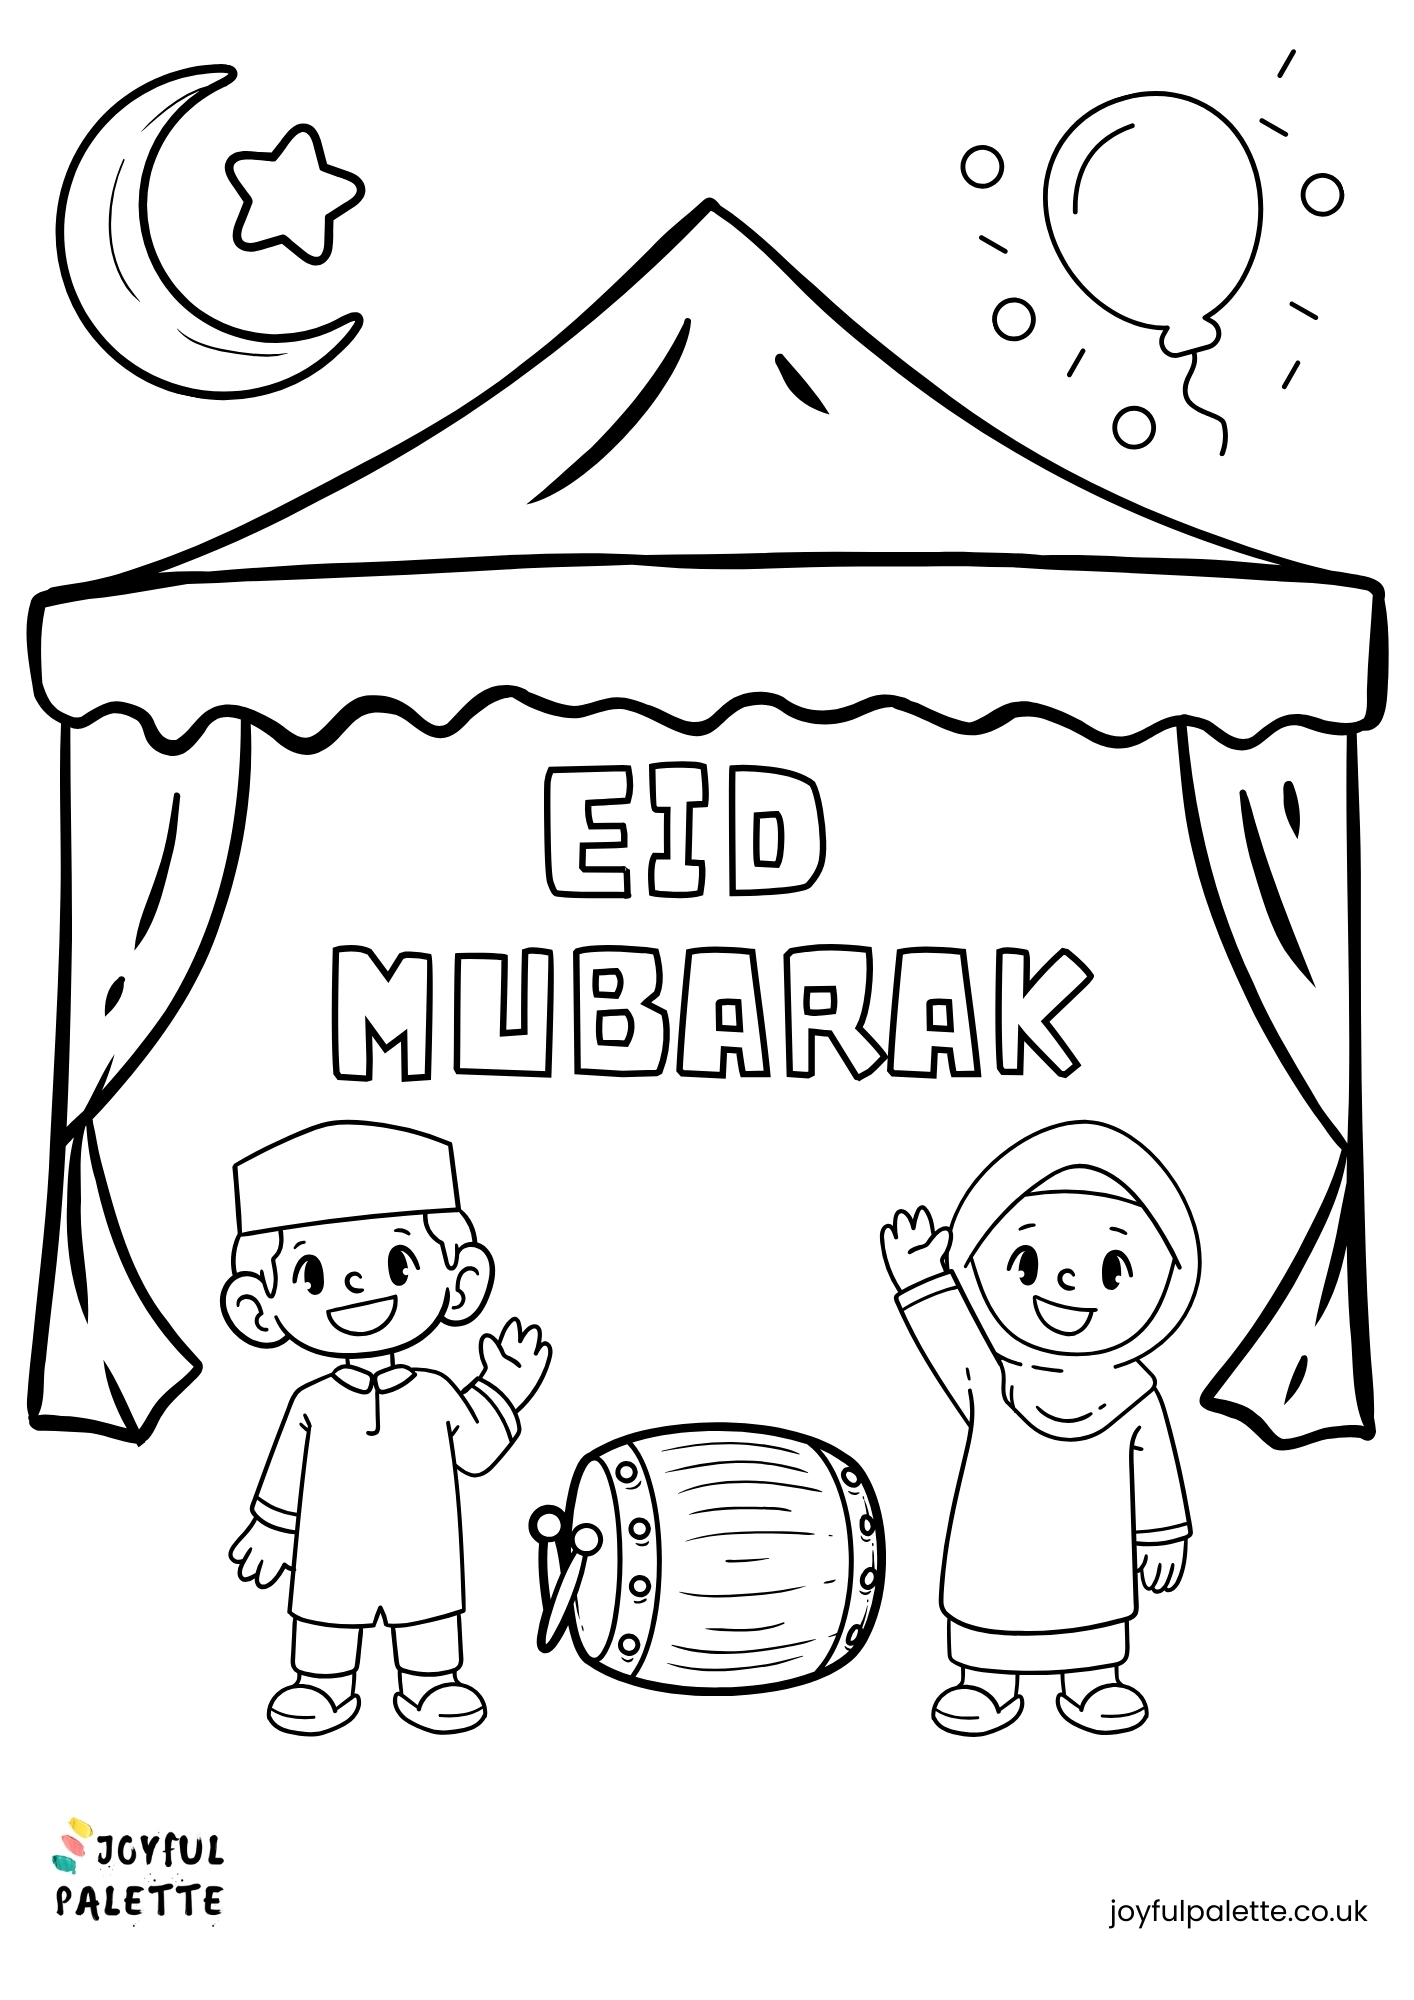 eid mubarak coloring page